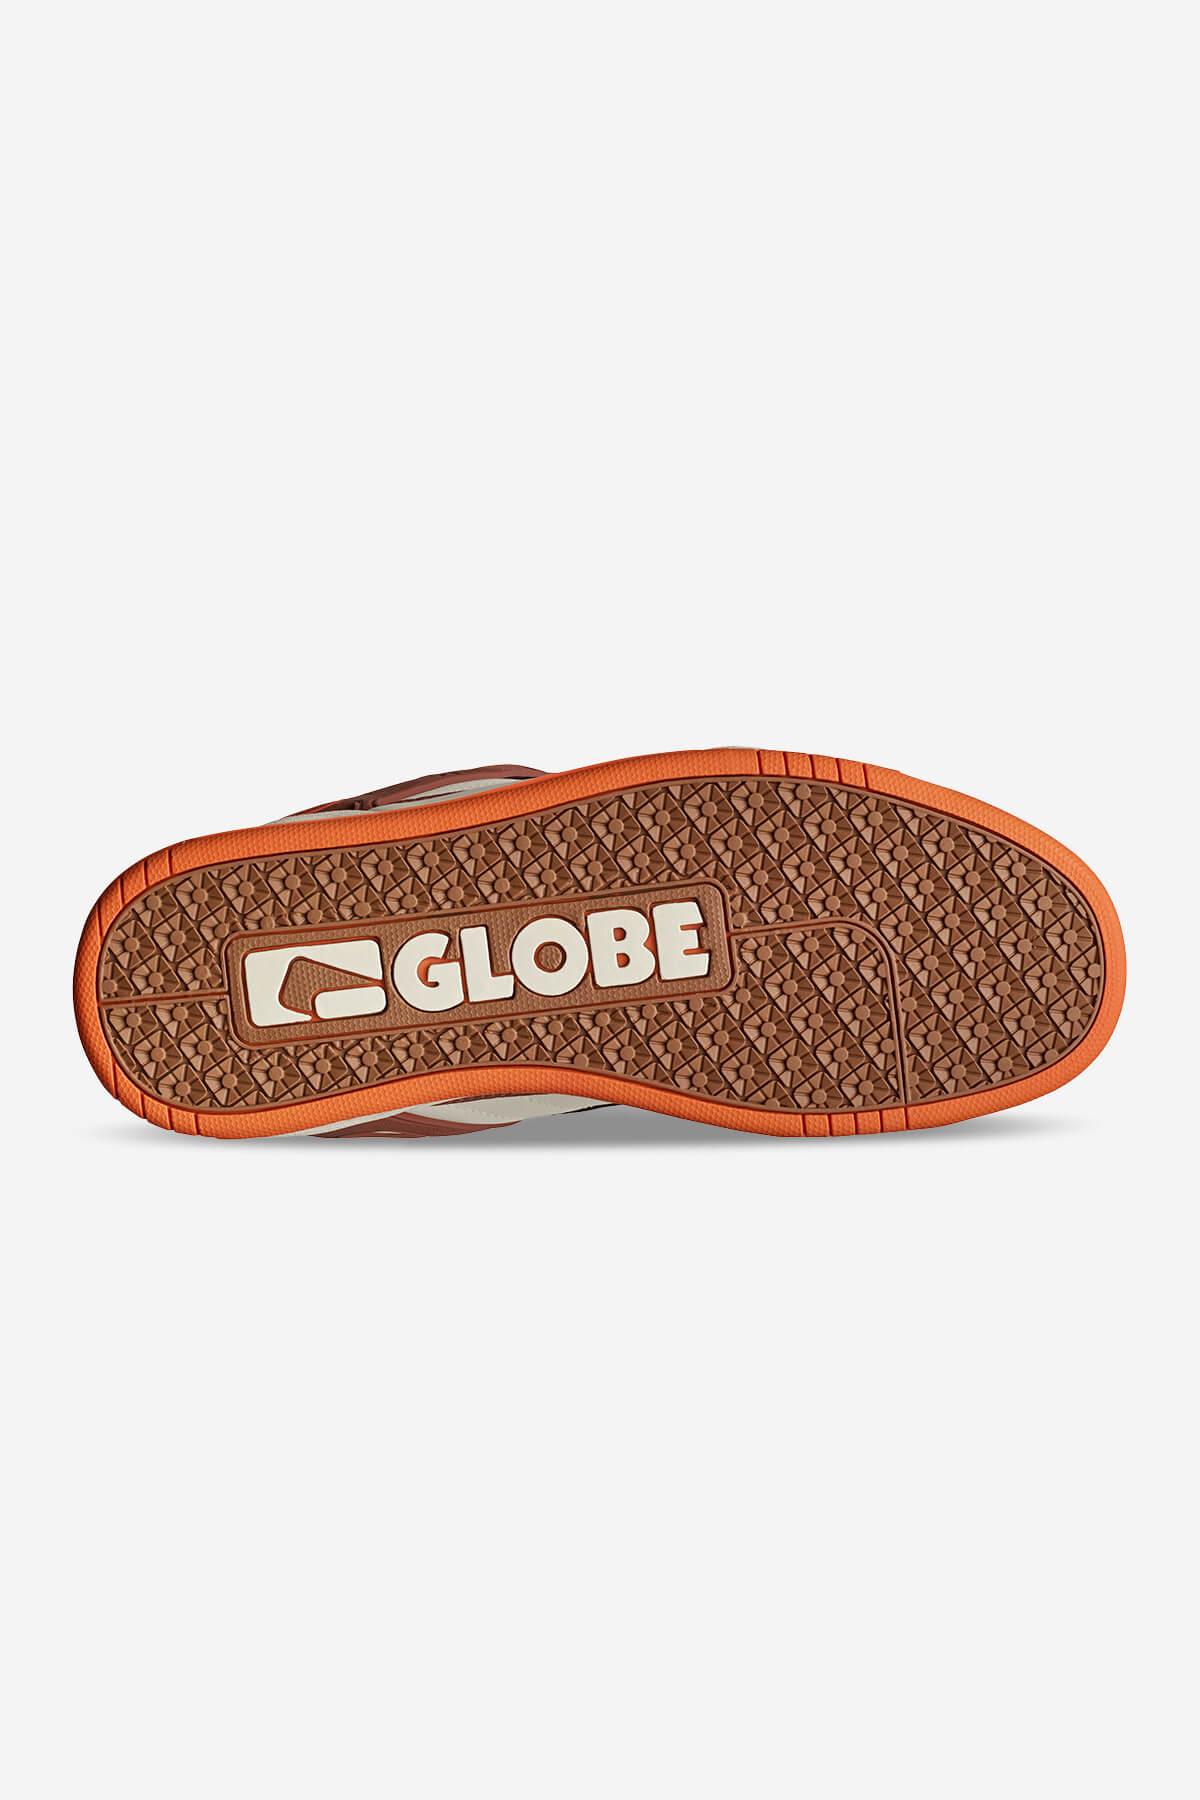 Globe - Tilt - Antique/Mocha - skateboard Sapatos